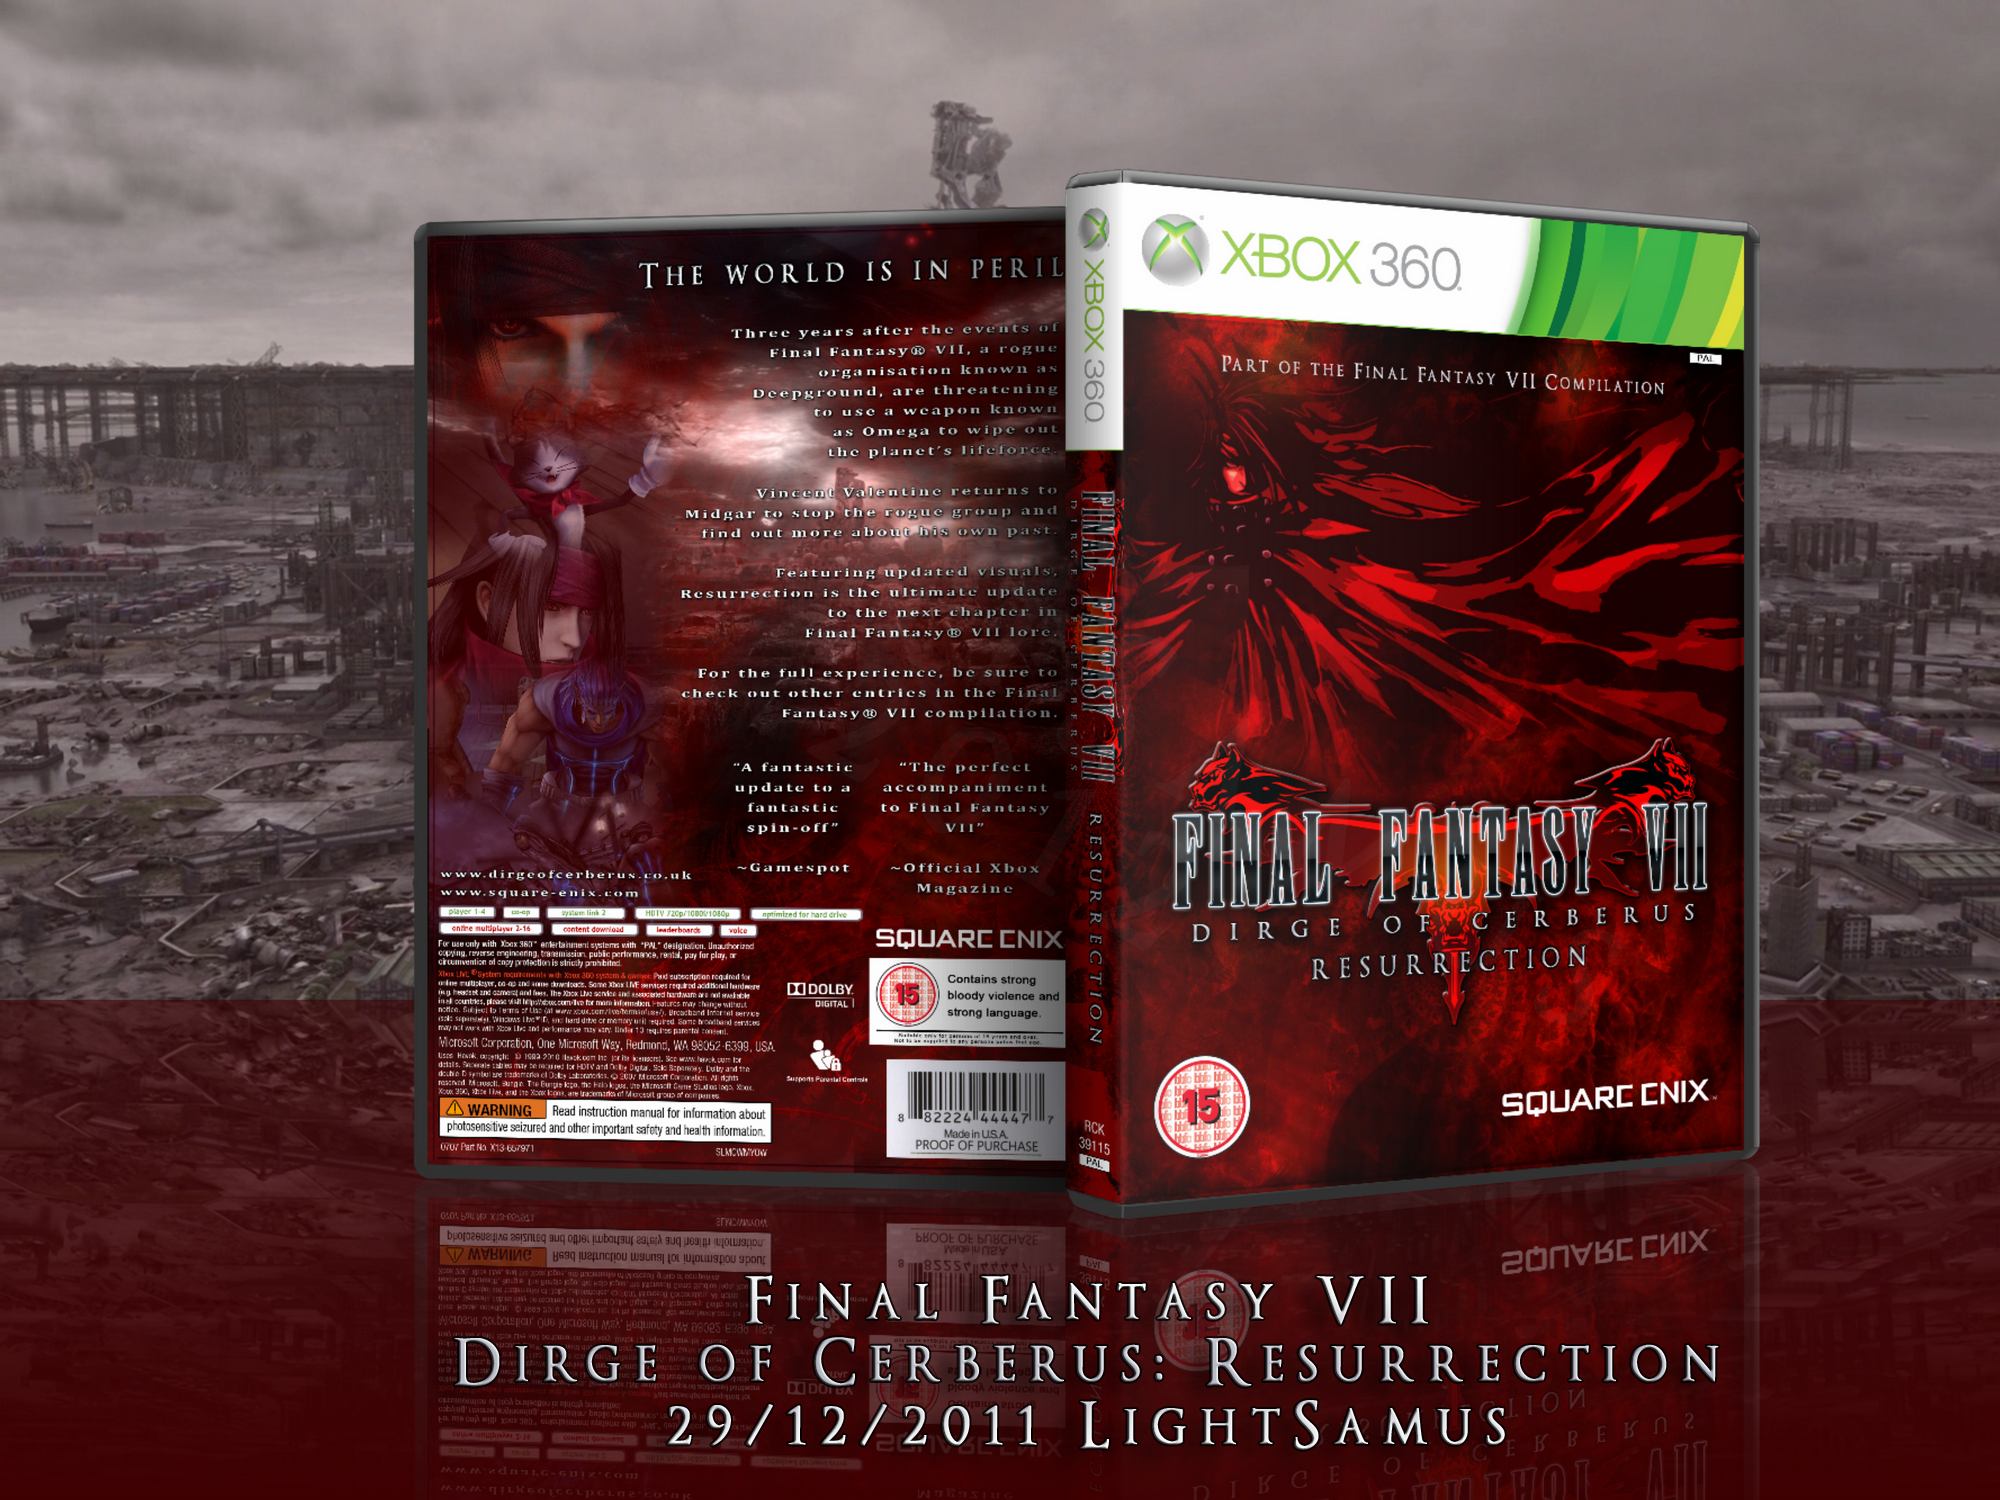 Final Fantasy VII Dirge of Cerberus: Resurrection box cover